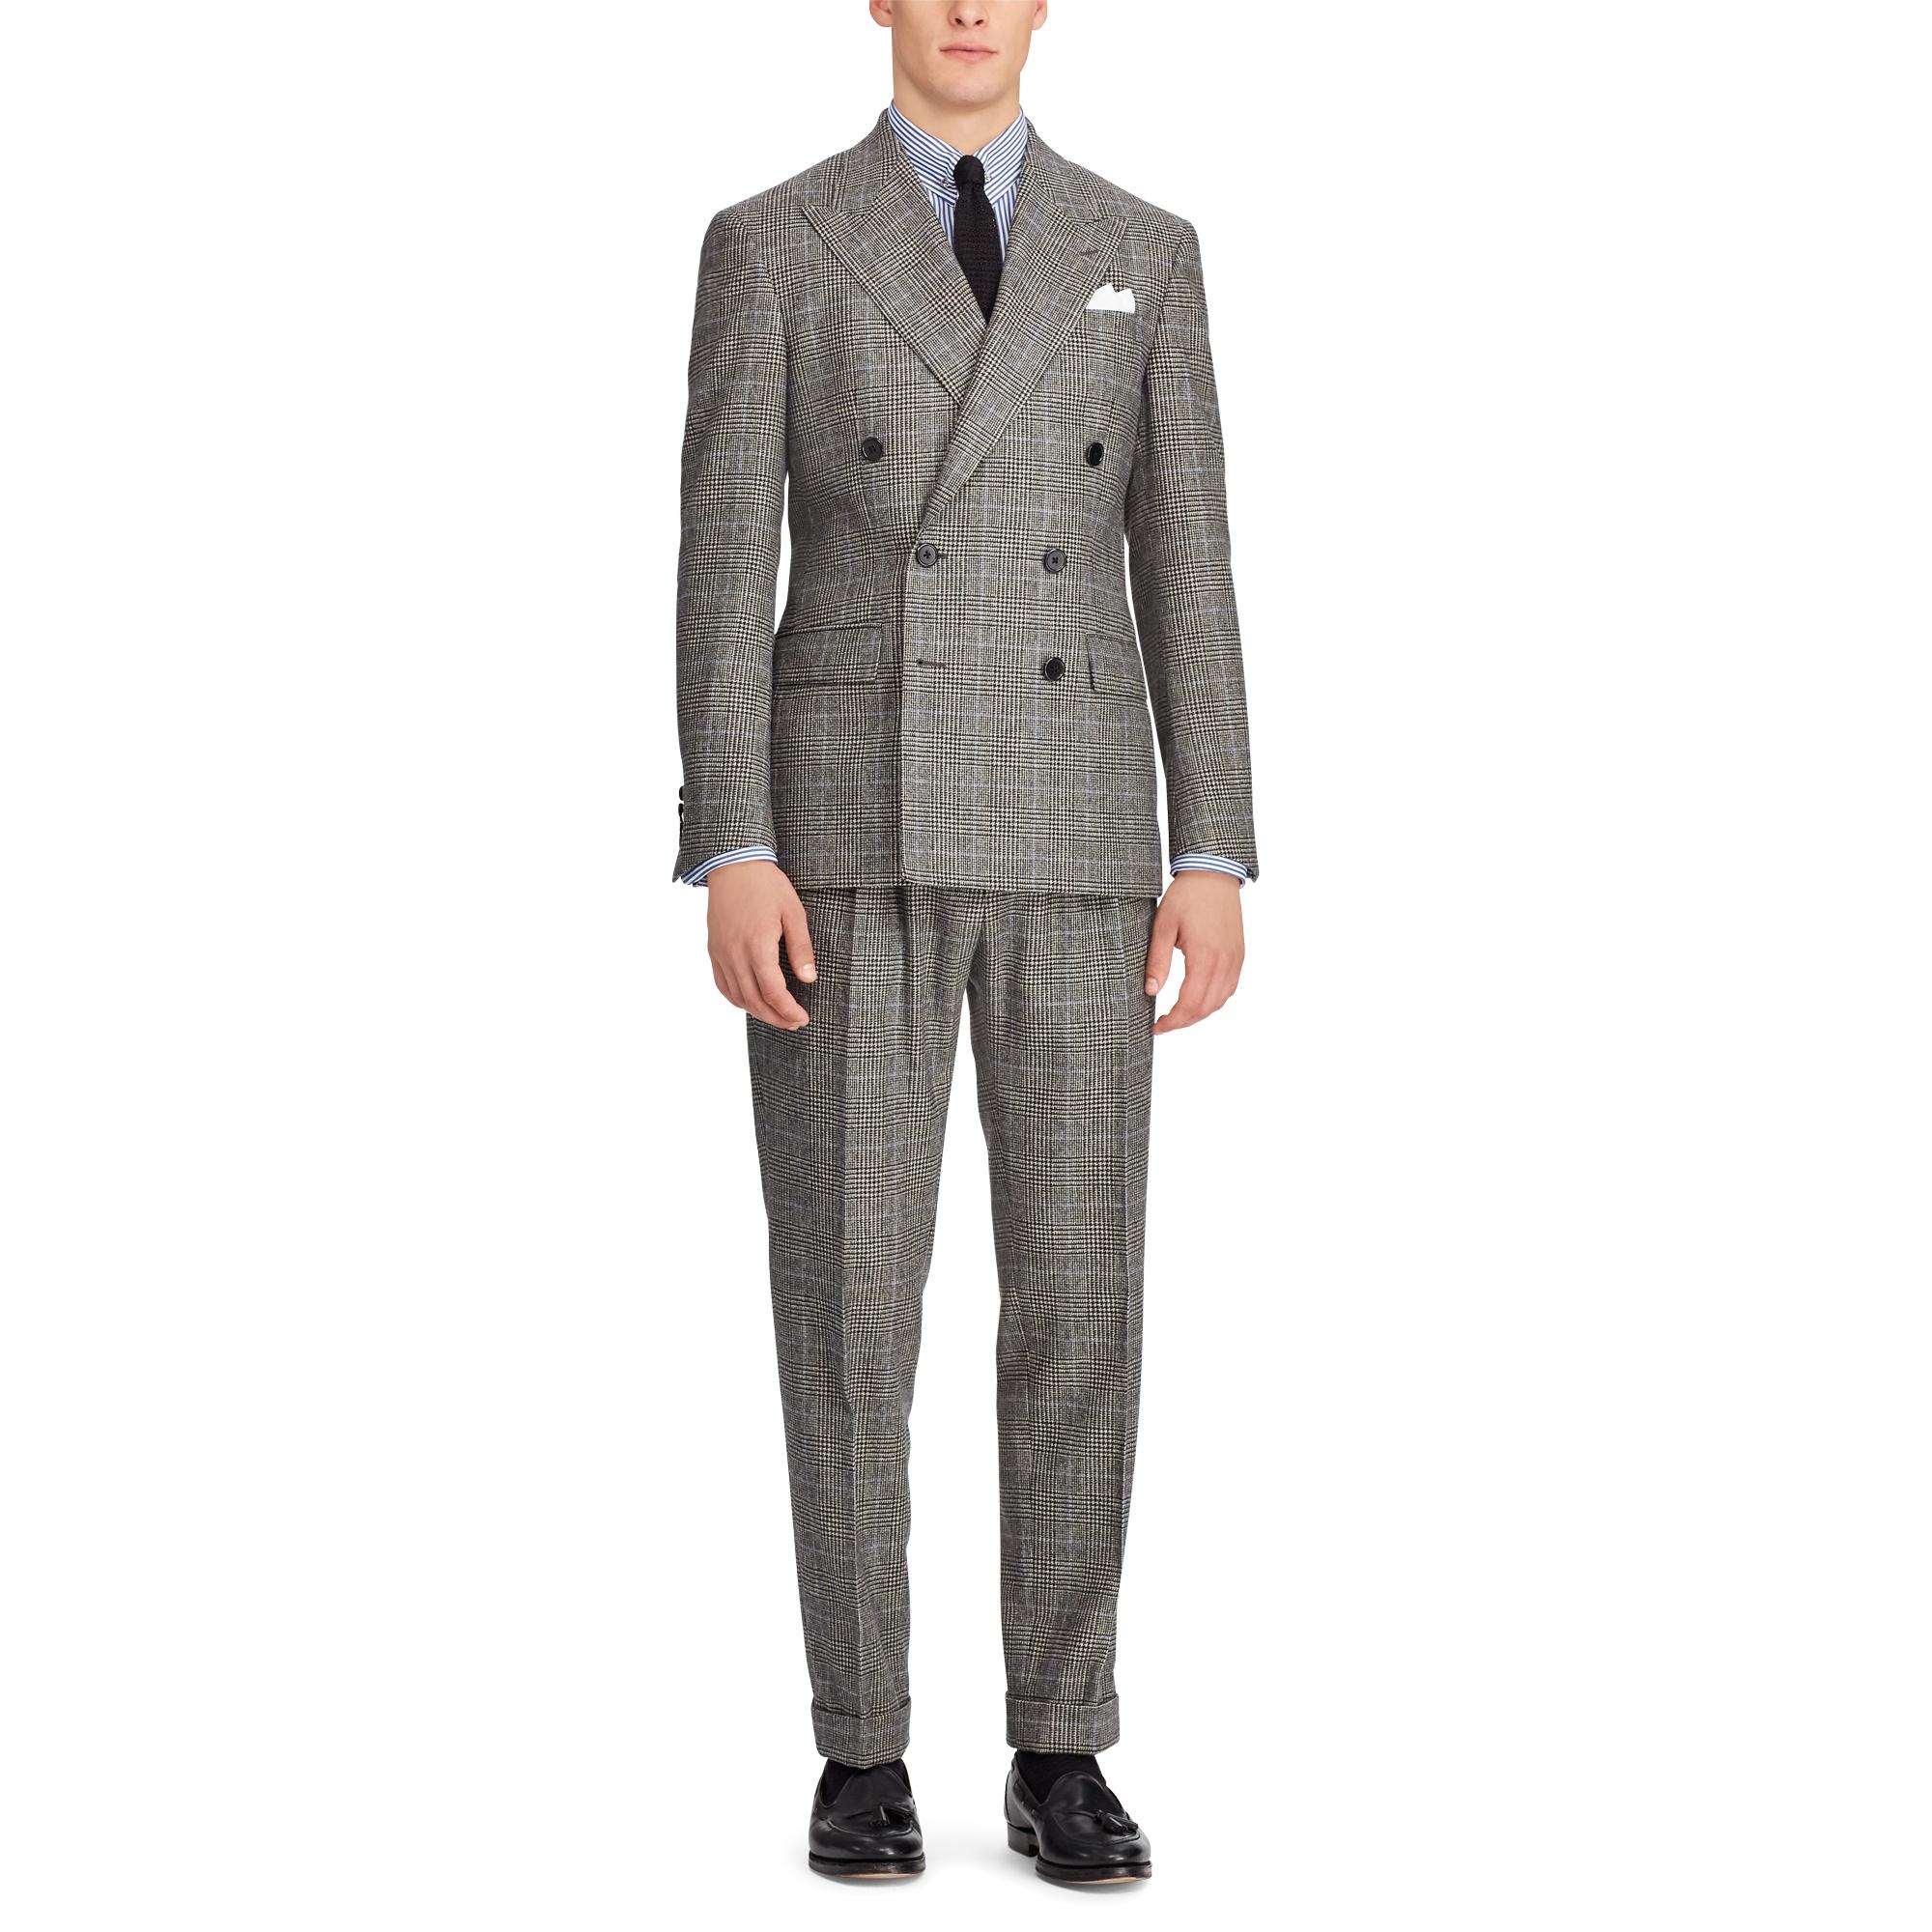 Ralph Lauren Wool Polo Glen Plaid Twill Suit in Gray for Men - Lyst